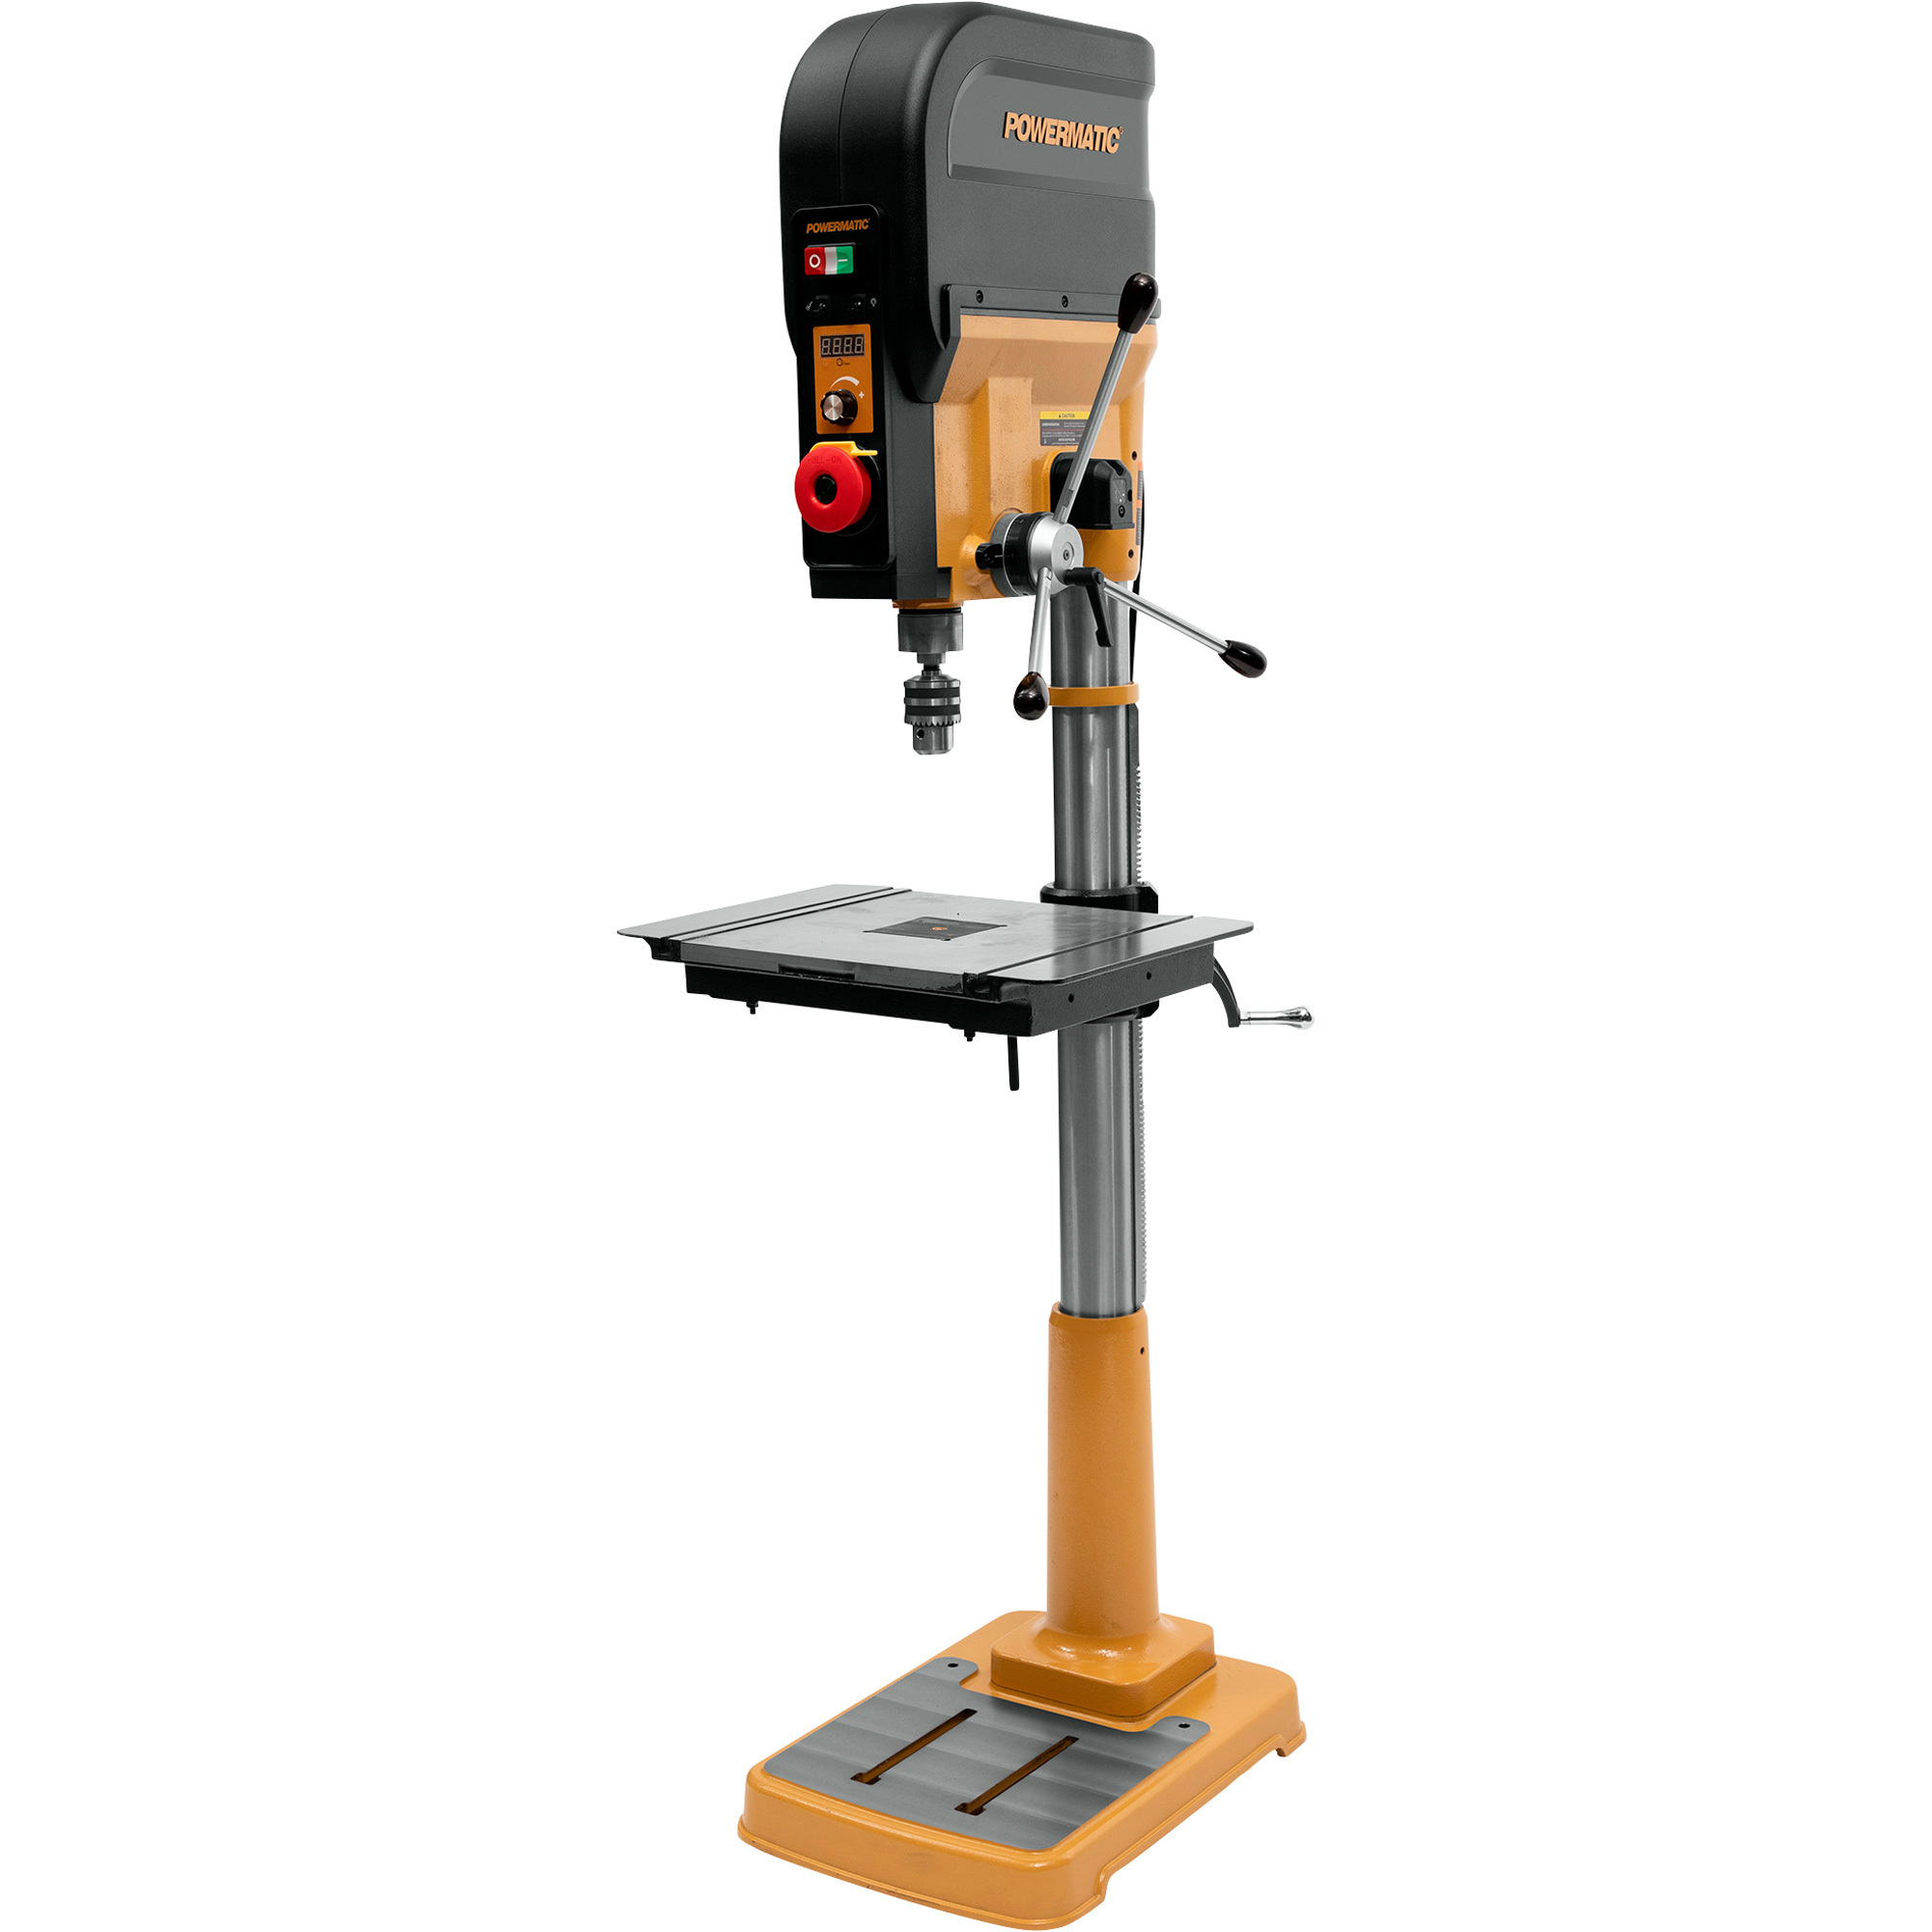 Powermatic Drill Press, Model PM2820